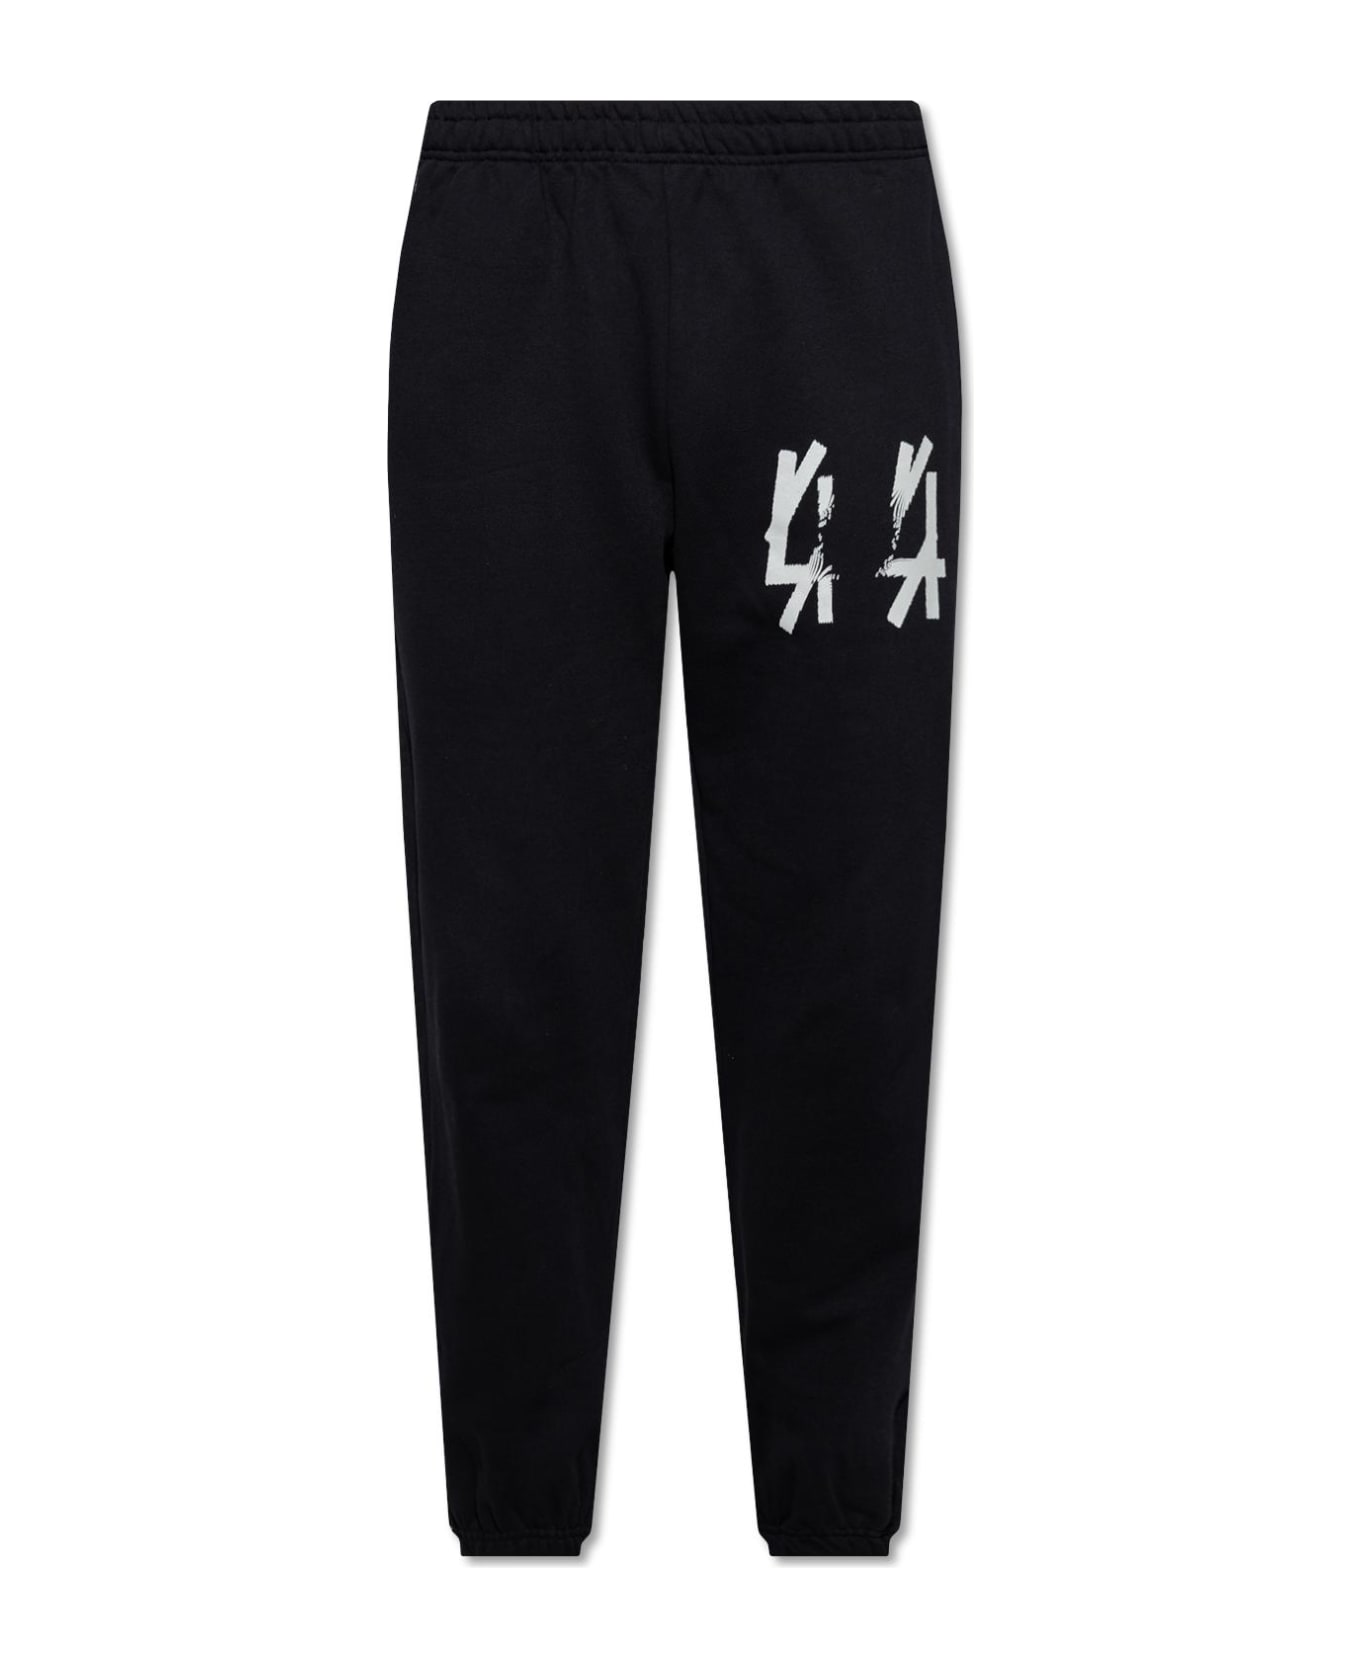 44 Label Group Sweatpants With Logo - Black スウェットパンツ